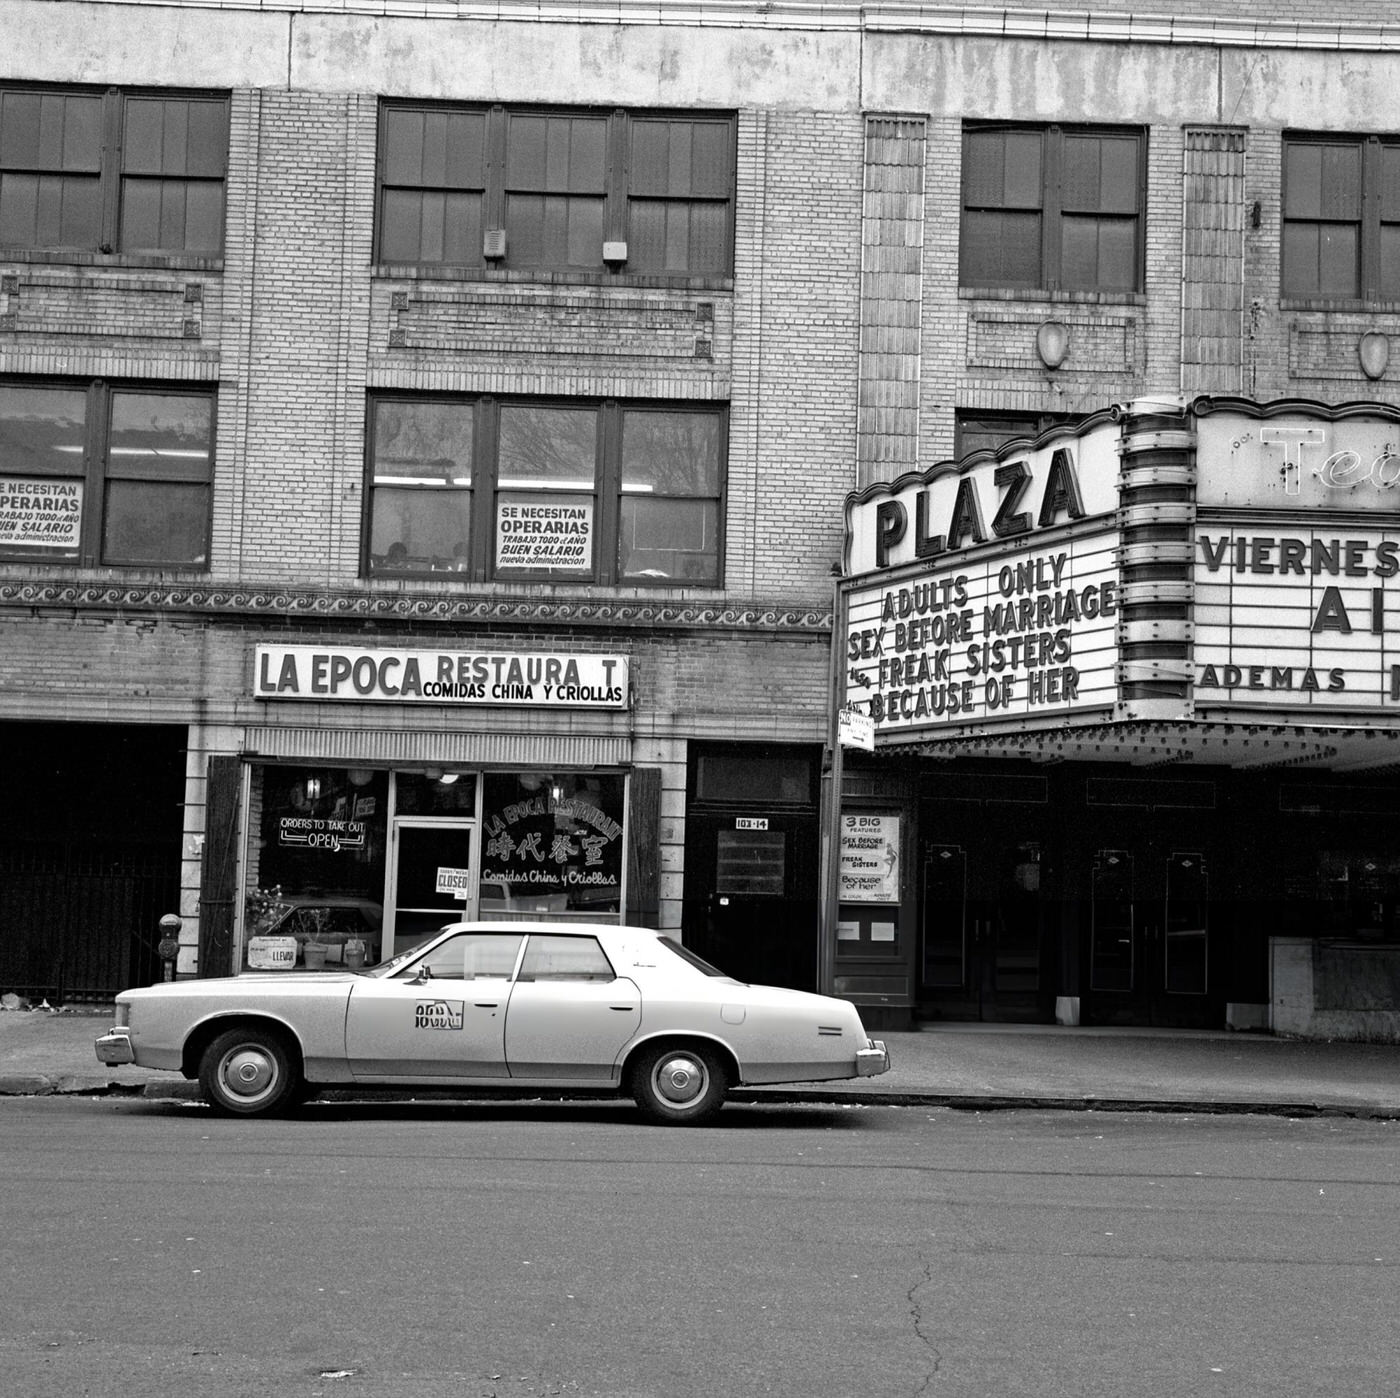 La Epoca Restauarant And The Plaza Theater Marquee On Roosevelt Avenue, 1975.